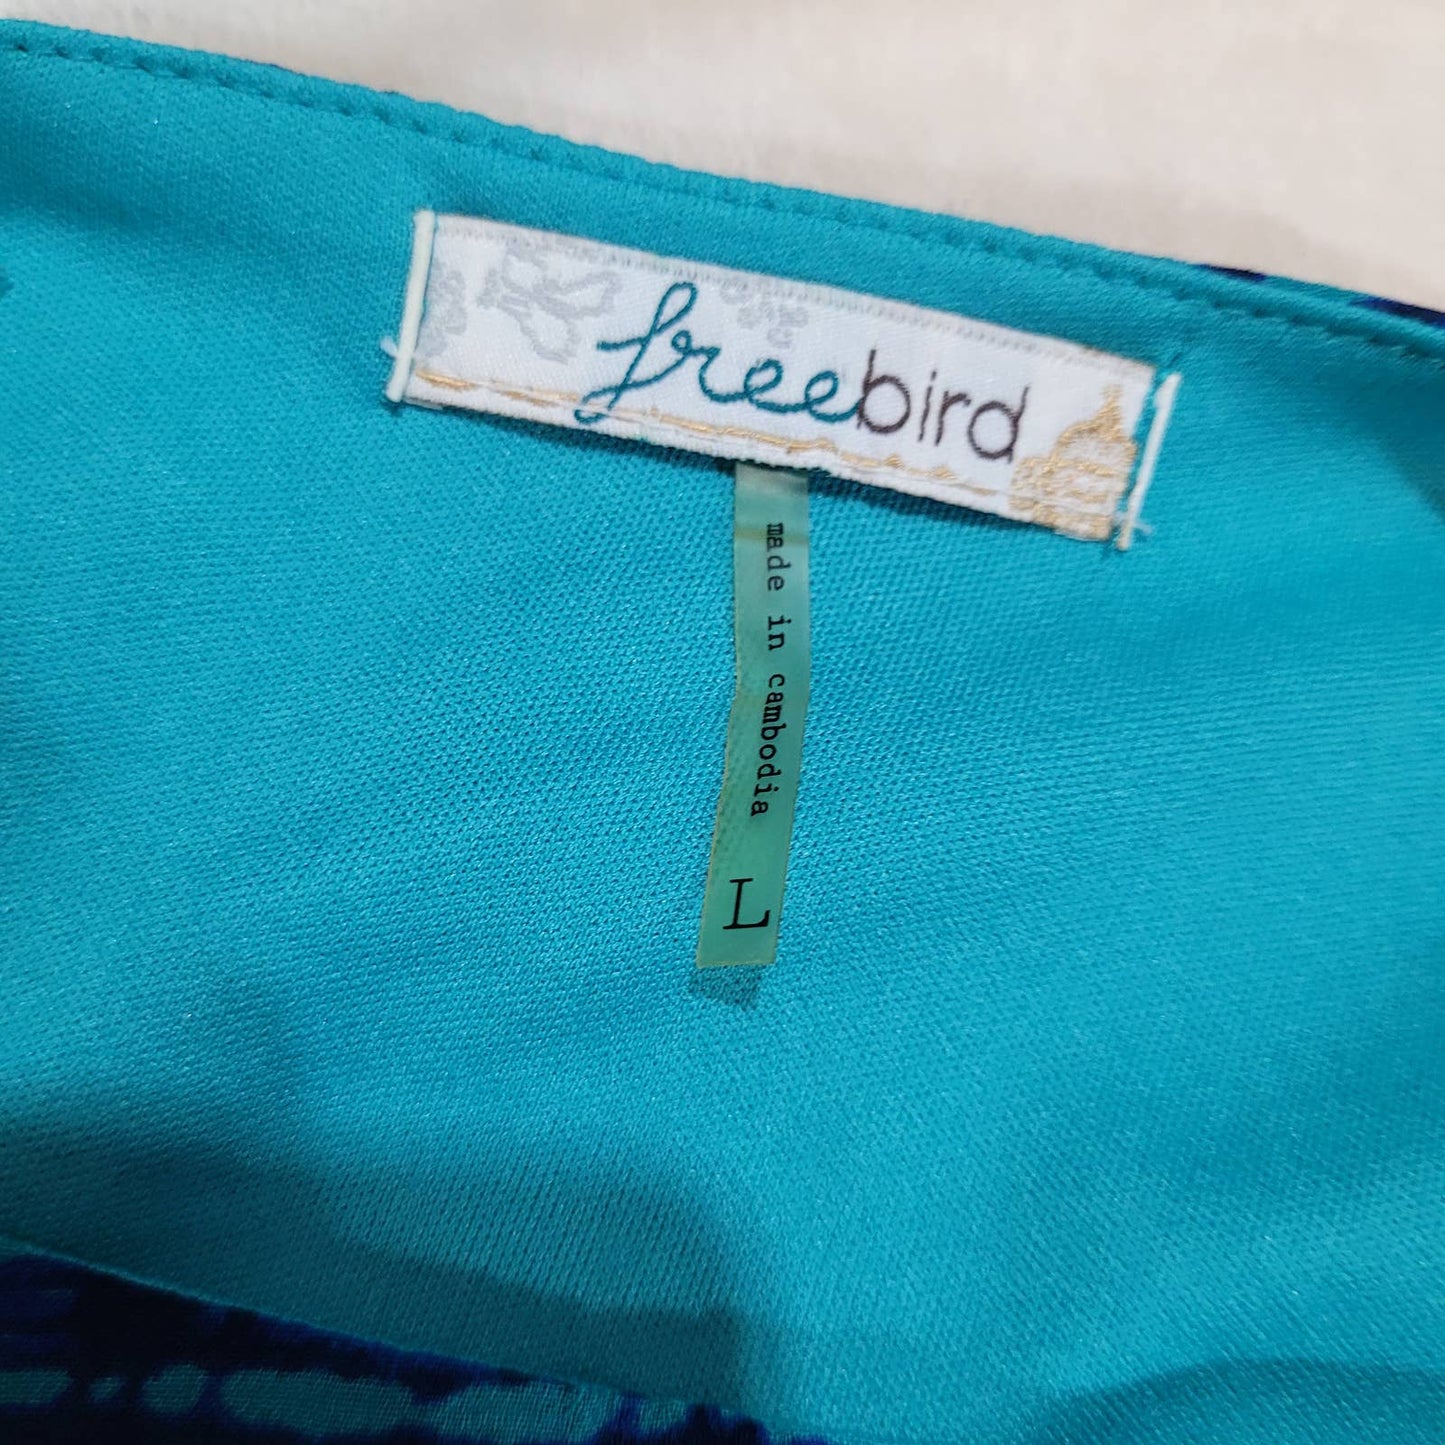 Freebird Blue and Teal Geometric Print High Low Chiffon Dress - Size LargeMarkita's ClosetFreebird